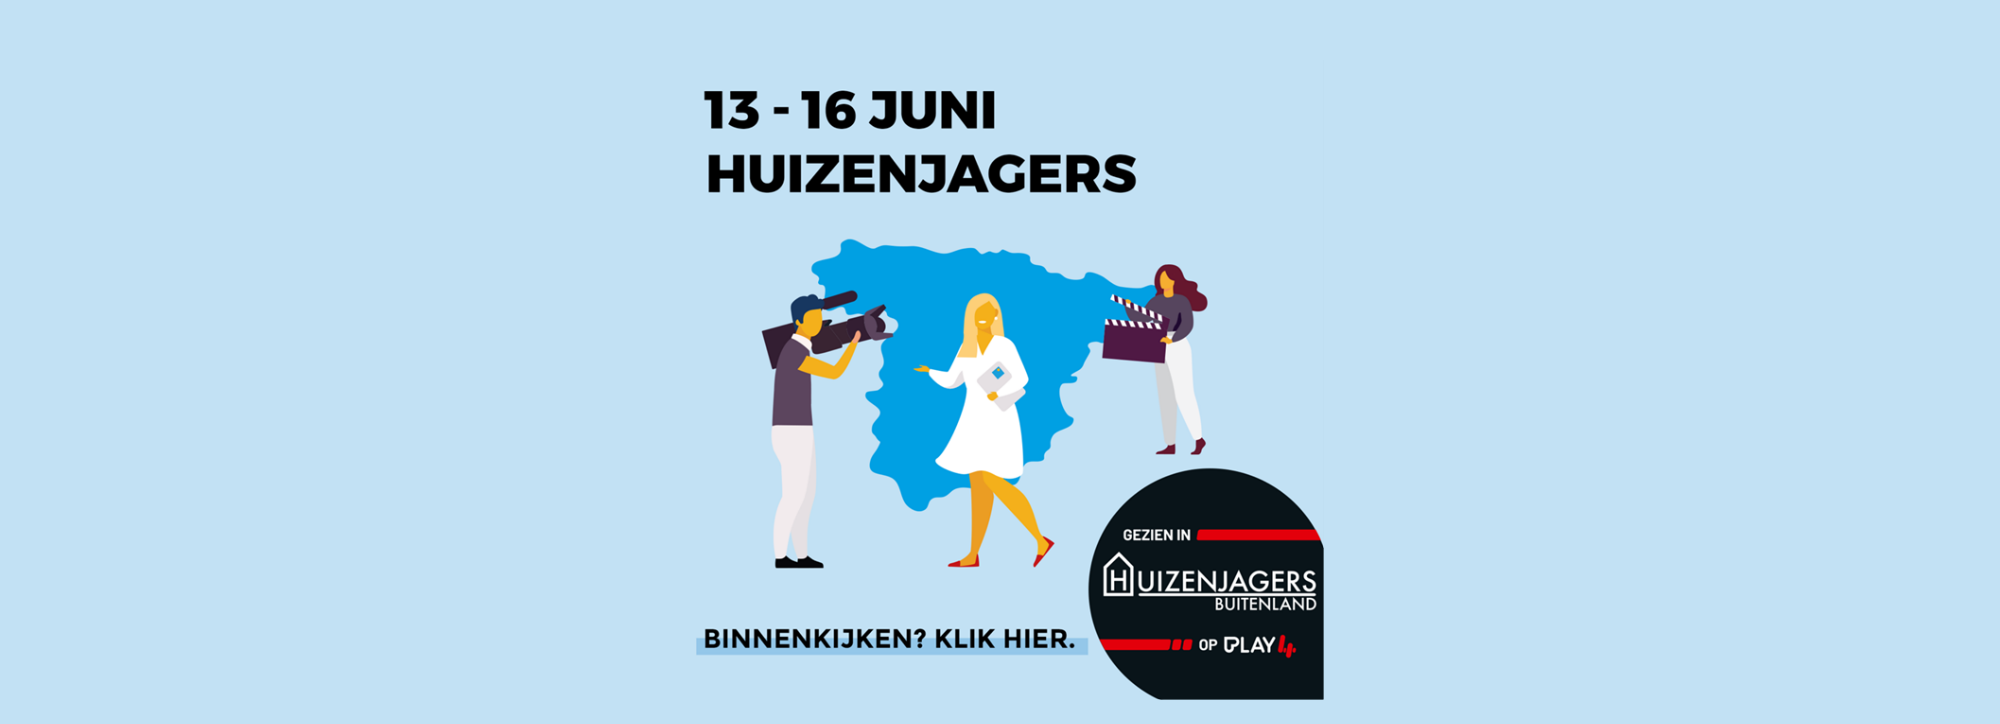 Play4 - Huizenjagers Buitenland